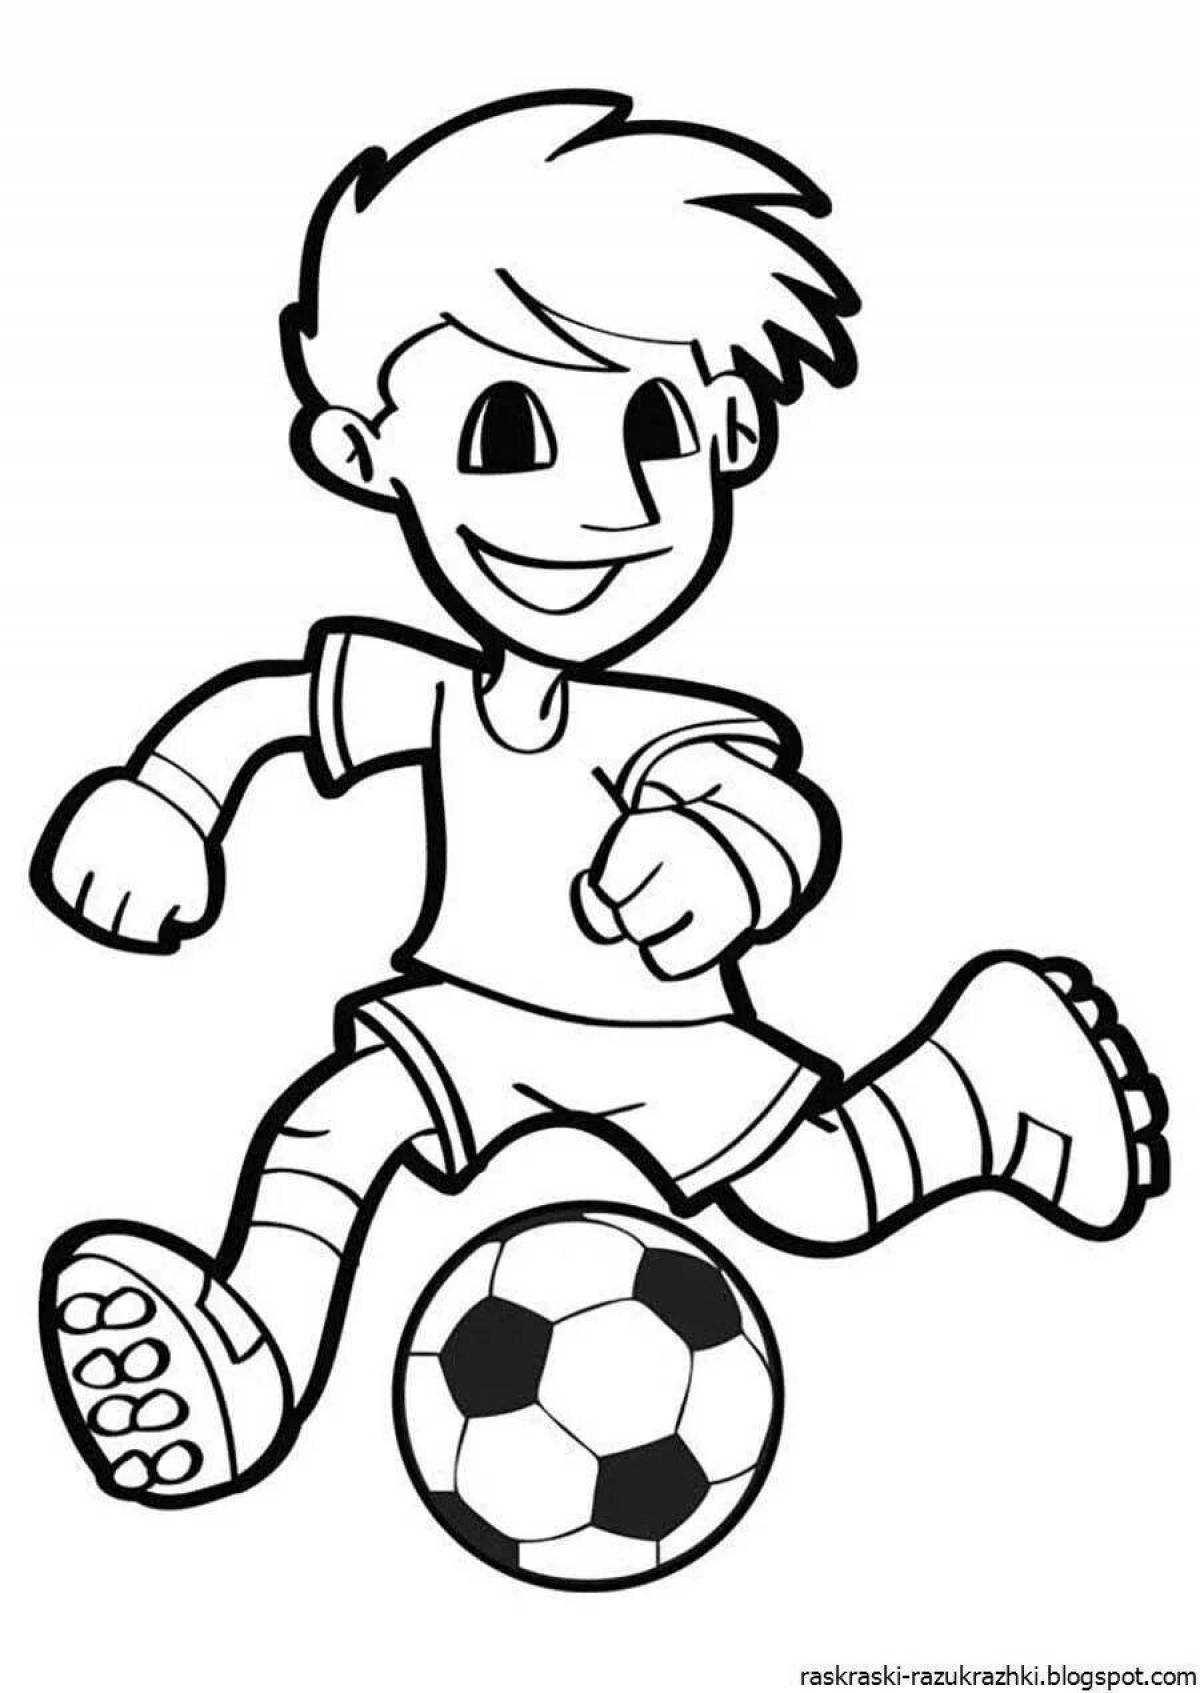 Kids soccer player #3